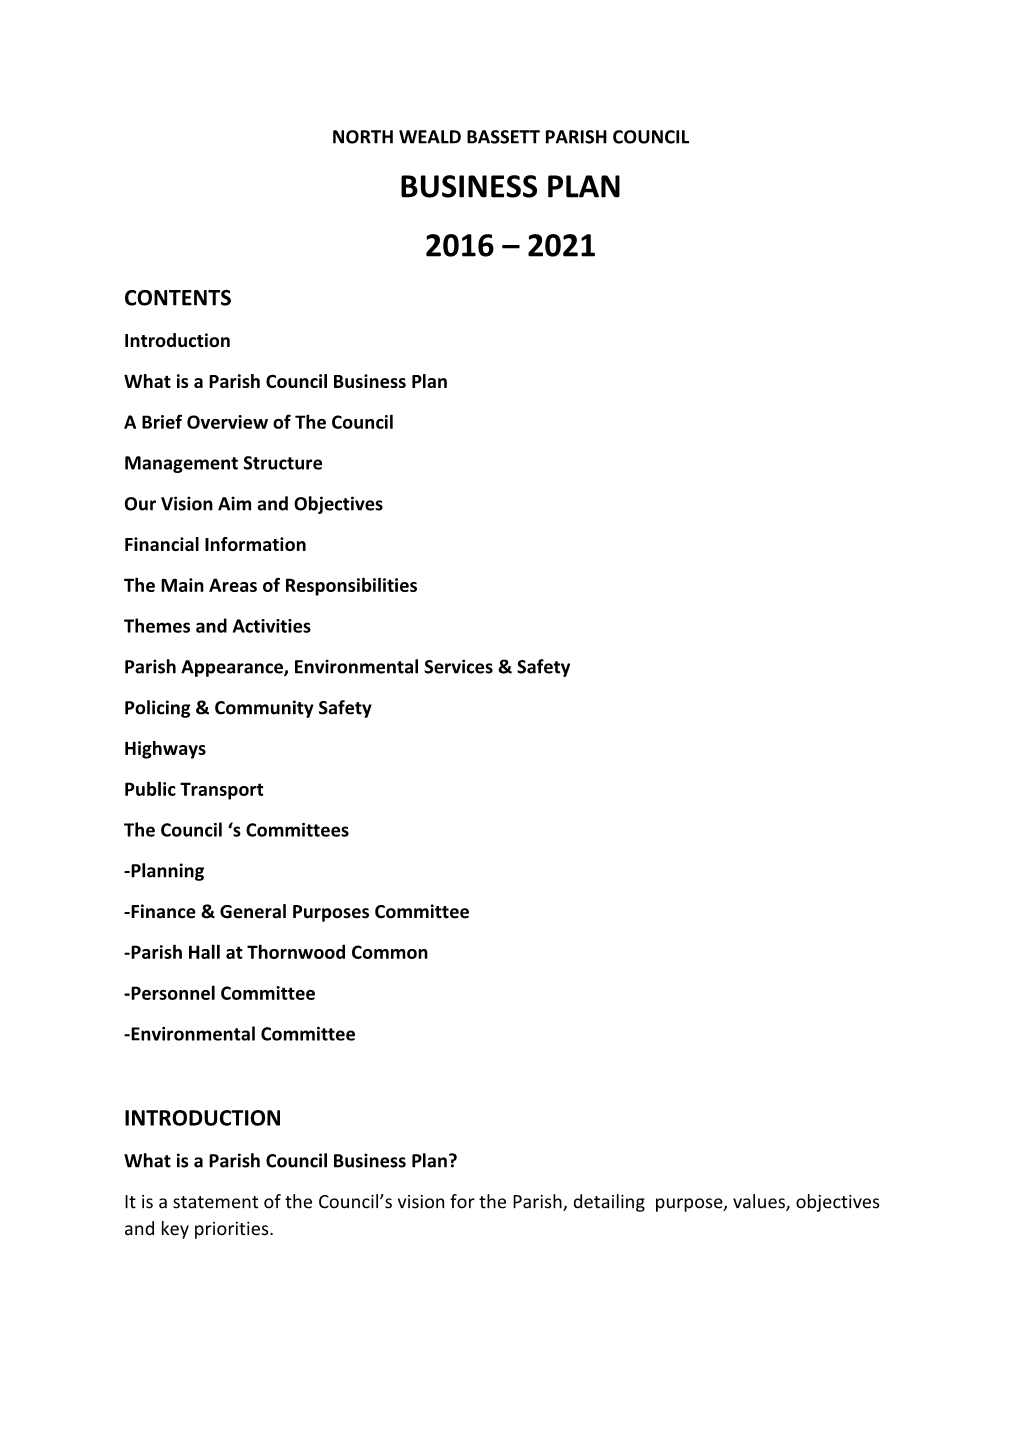 Business Plan 2016 – 2021